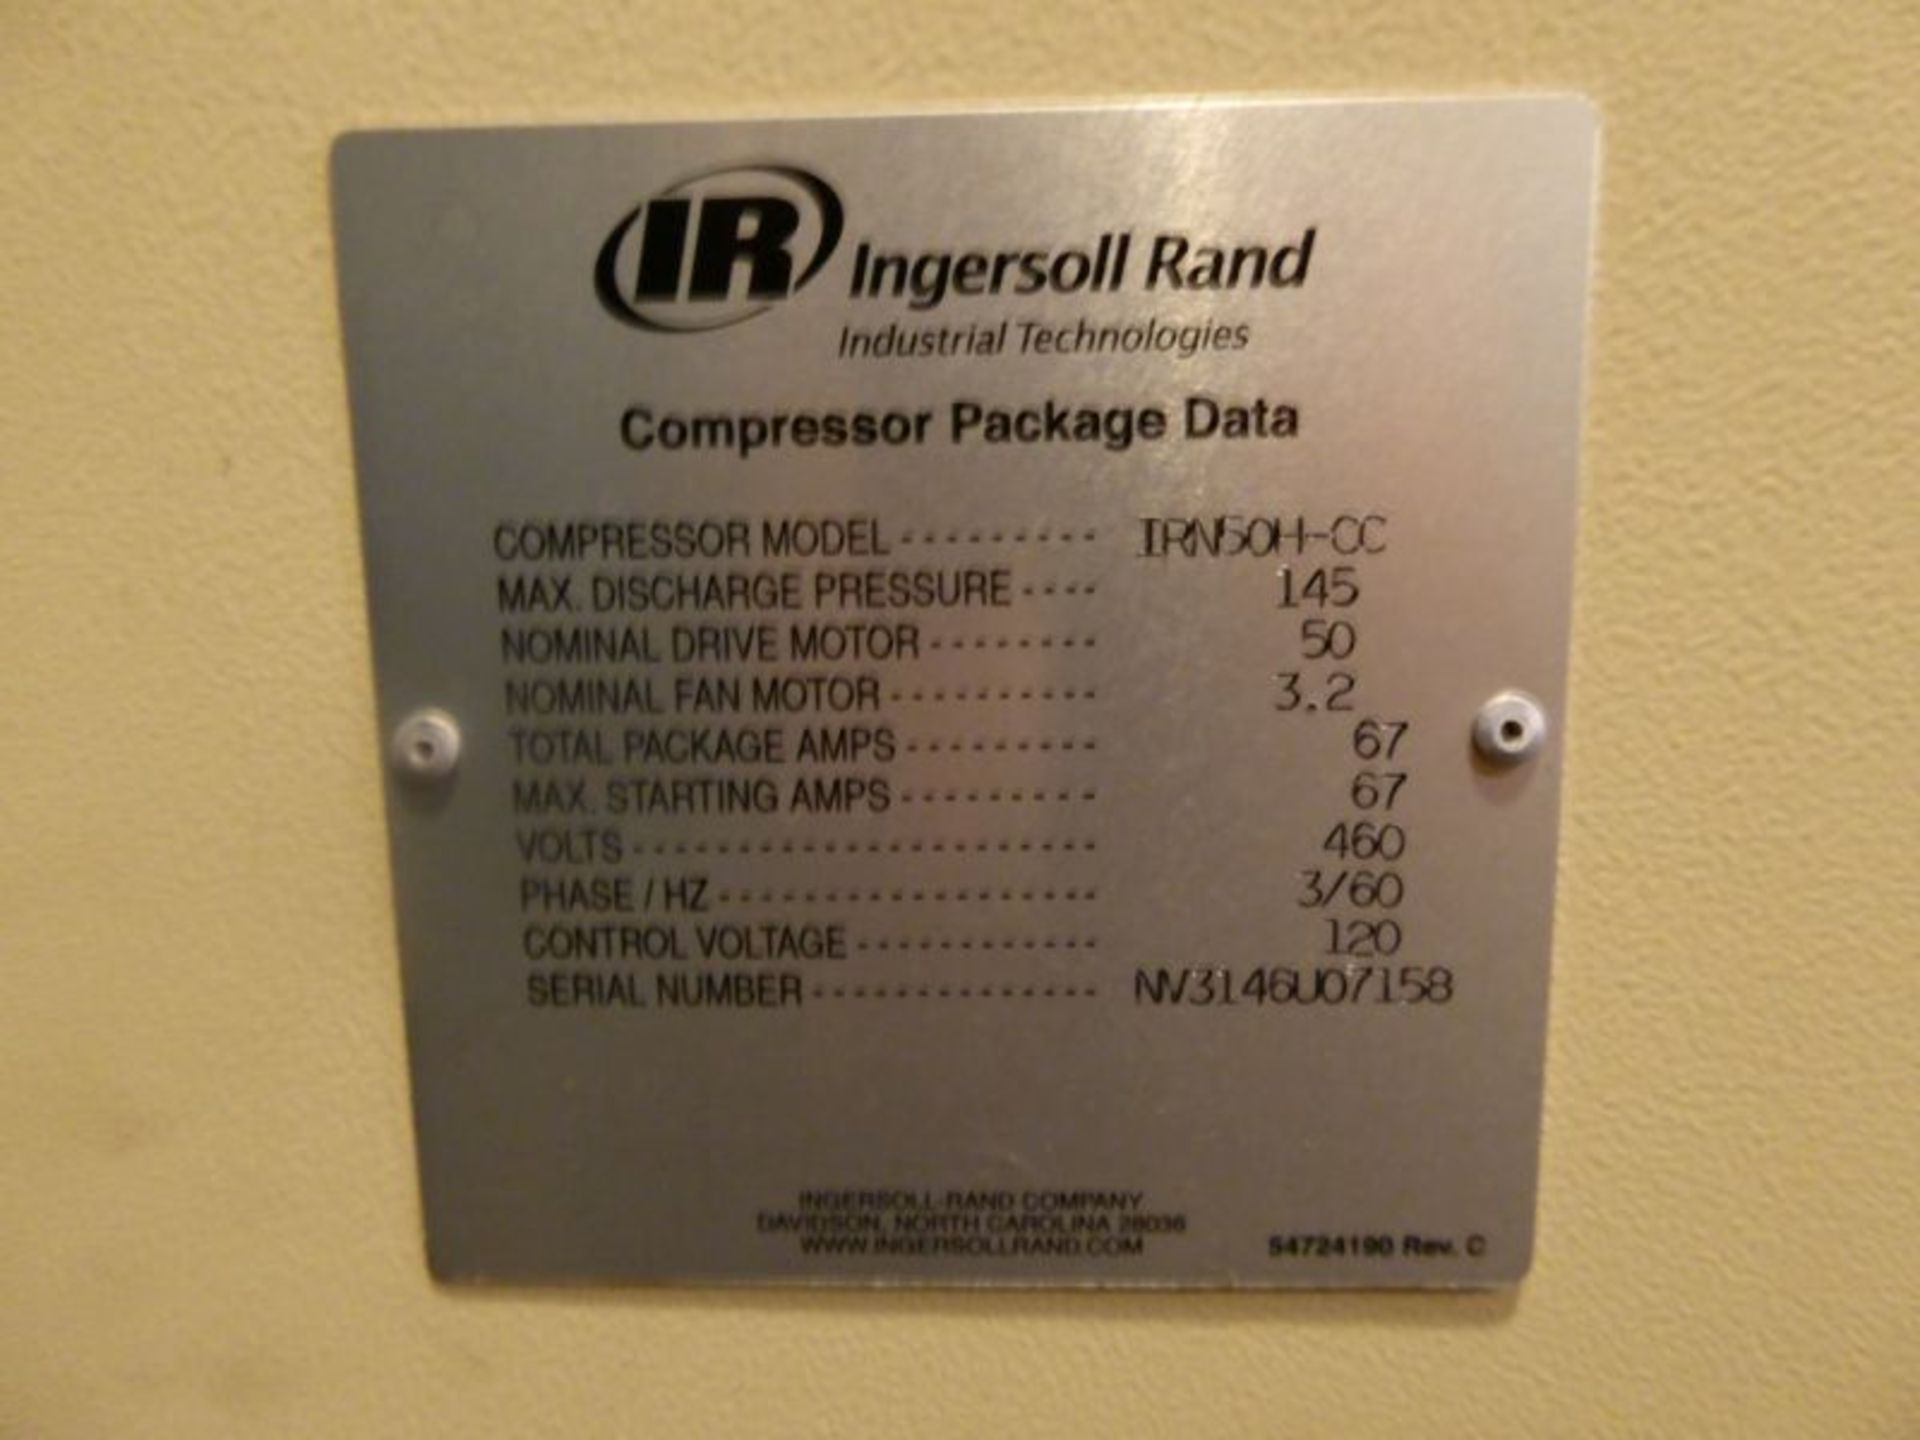 2007 Ingersoll Rand 50 HP Premium Efficiency Air Compressor, Model: IRN50H-CC, S/N: NV3146UO7158 - Image 3 of 6